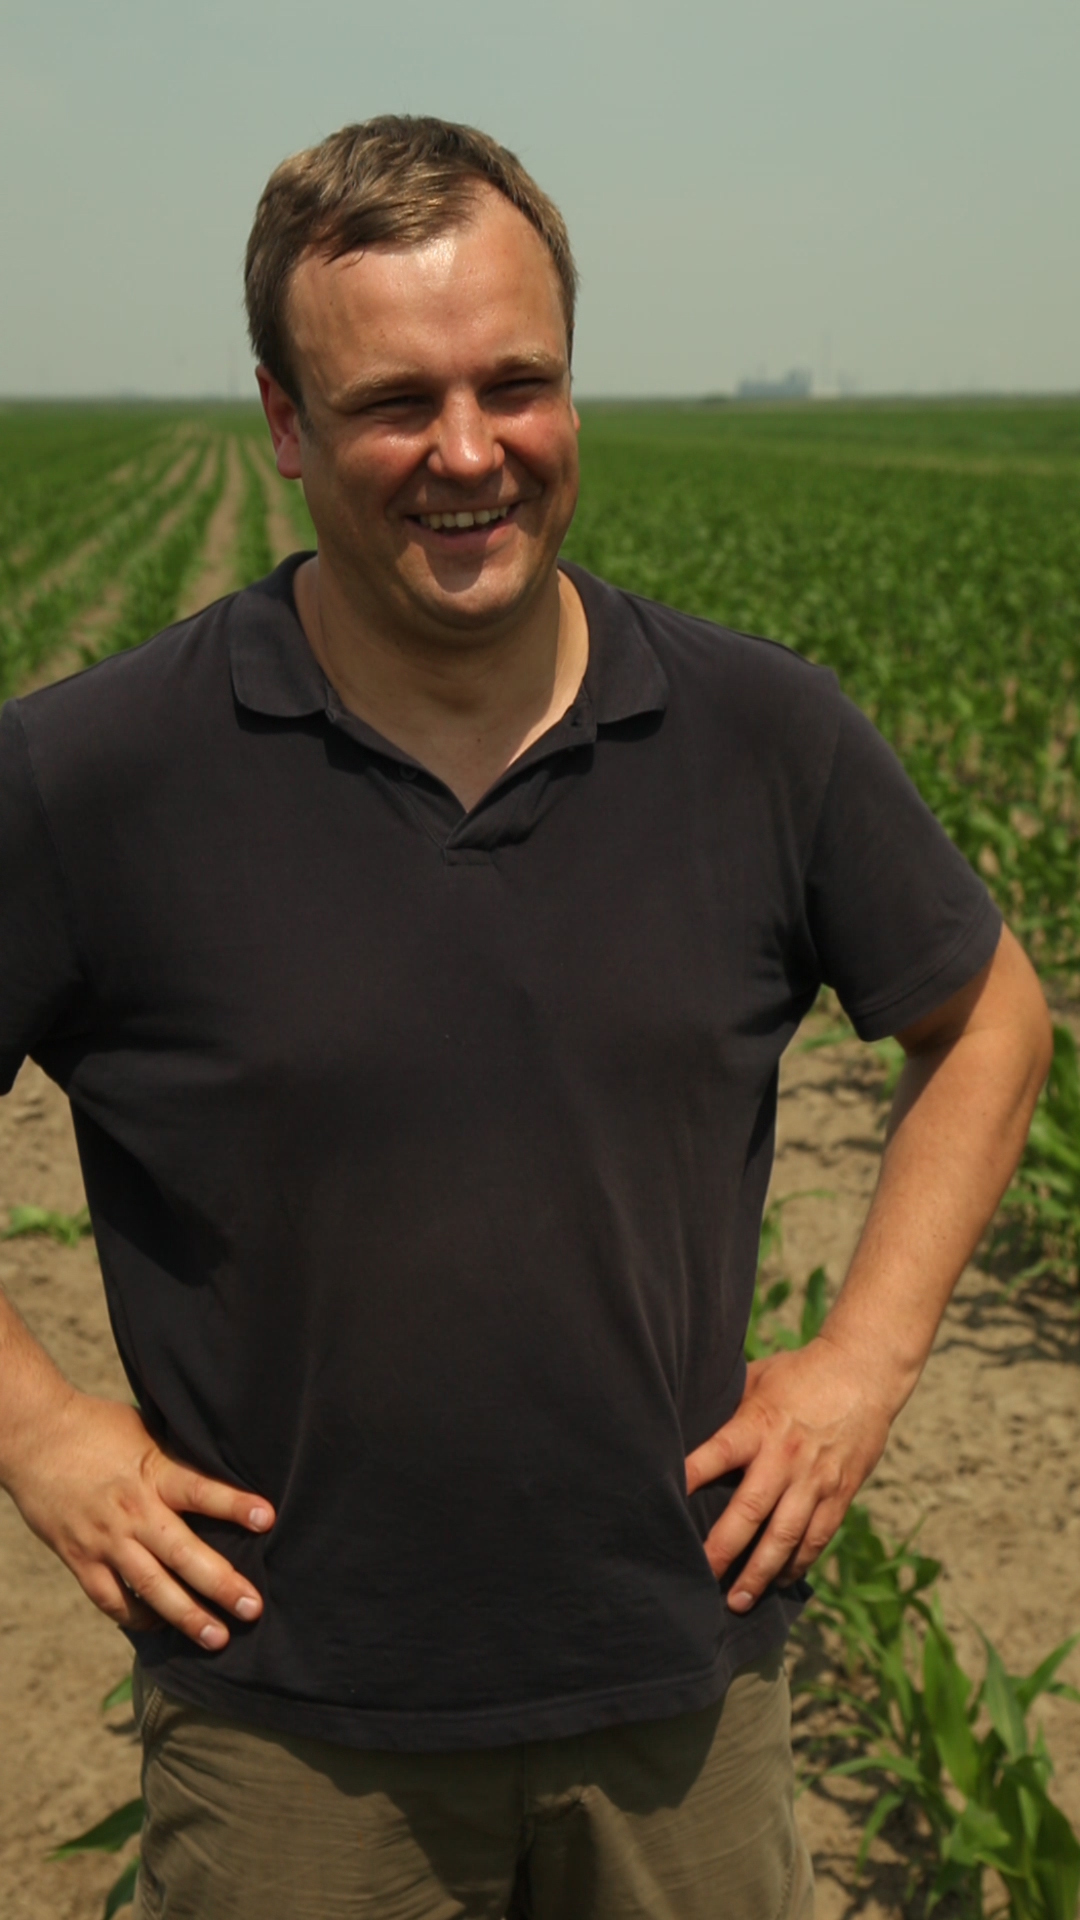 Kmetovalec Claus Schmoldt